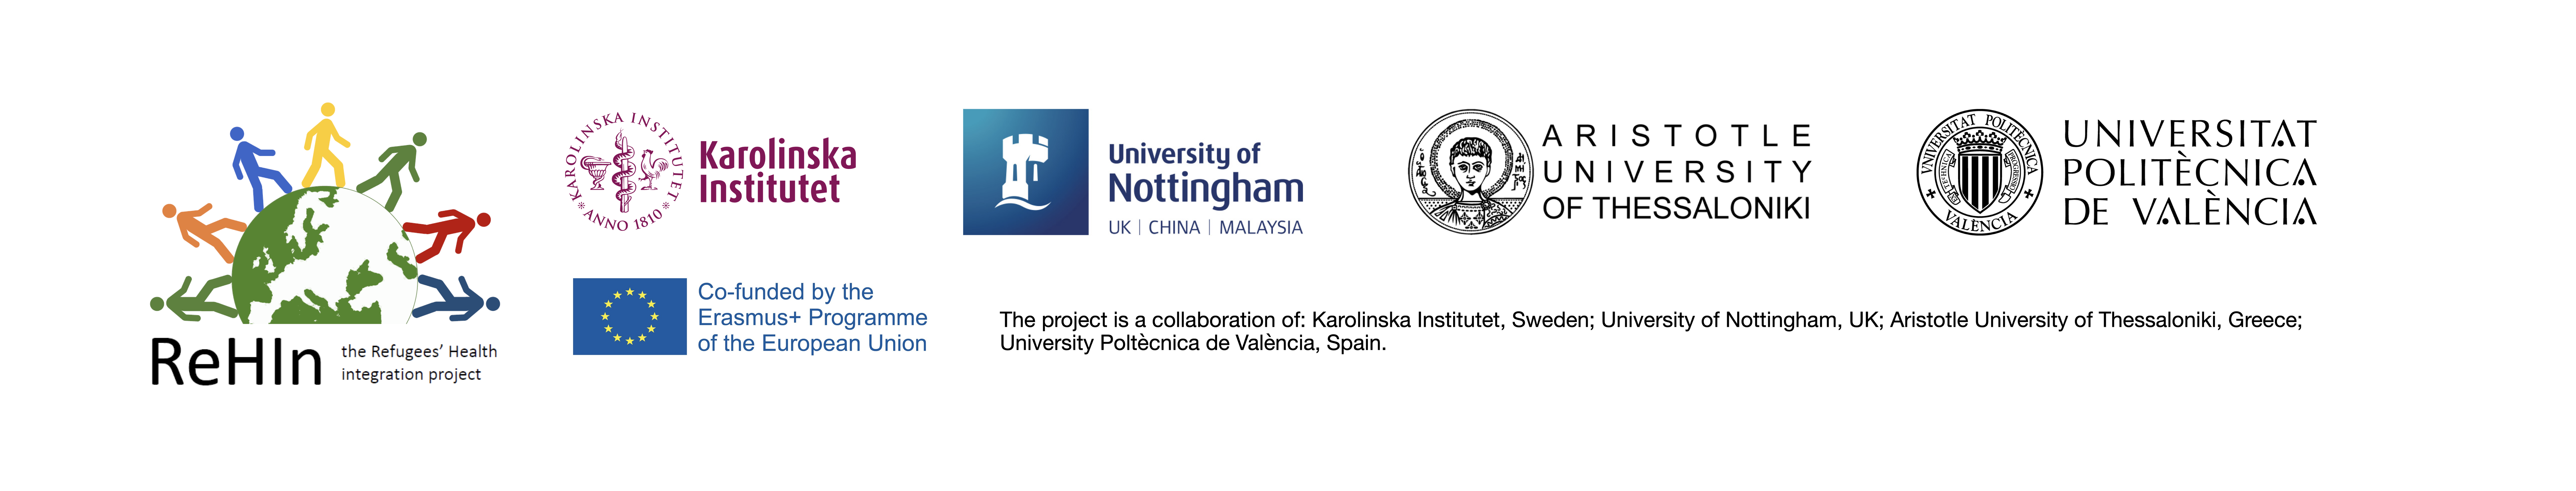 The Rehin project logo including partner logos from Karolinska Institute, University of Nottingham, Aristotle University of Thessaloniki and Universitat Politecnica de Valencia.